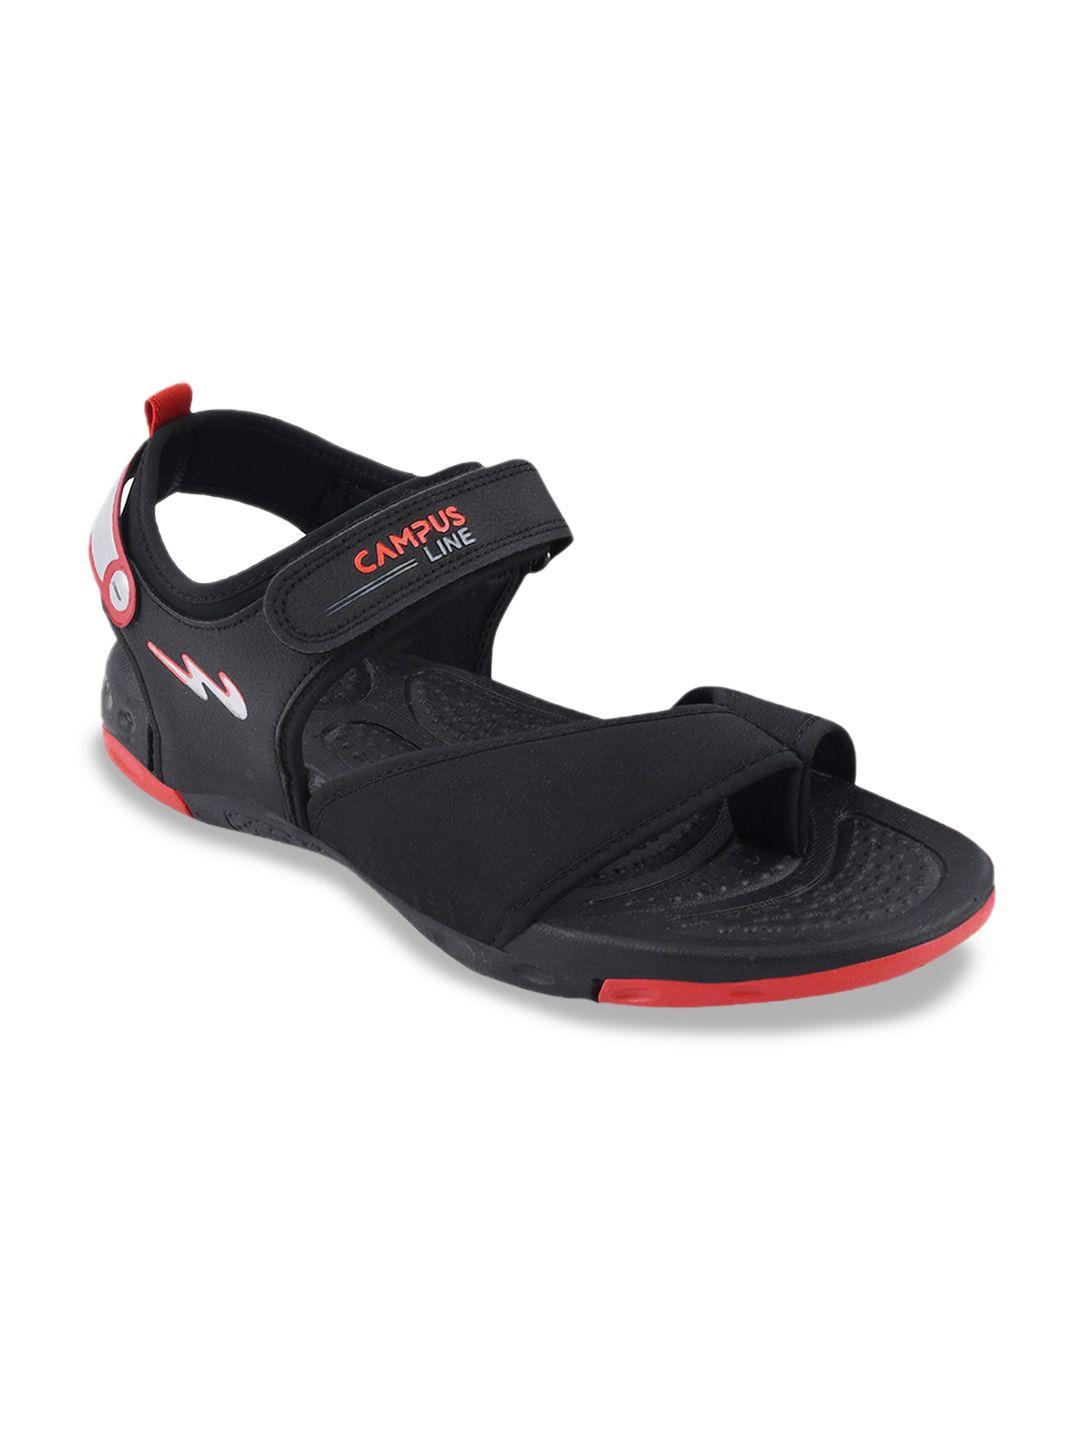 campus men black & red solid sports sandals